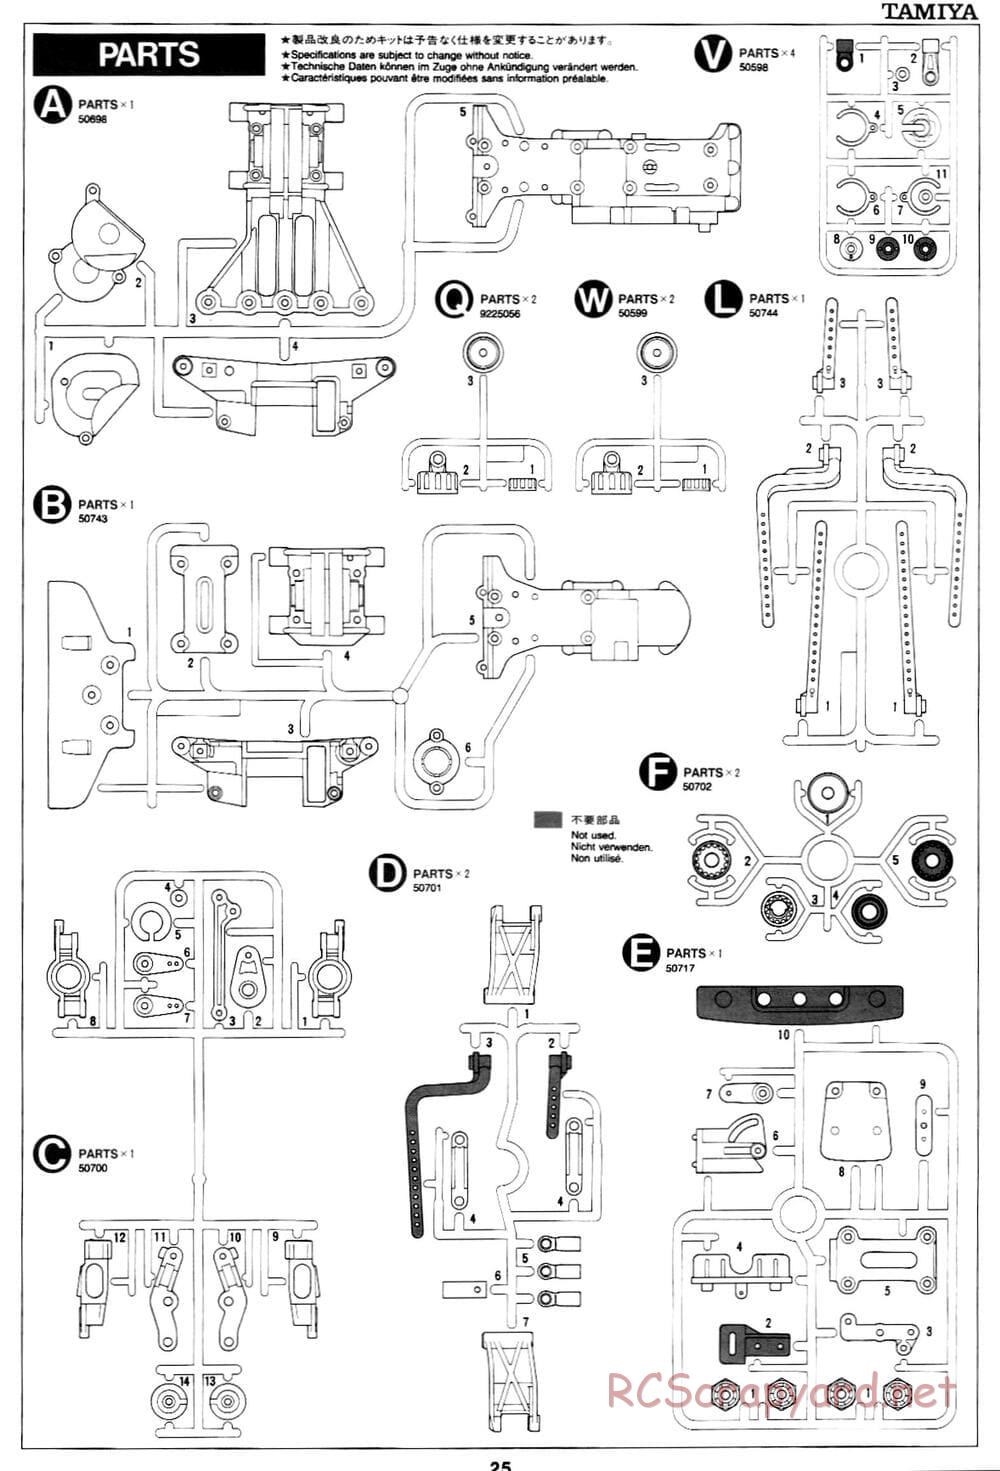 Tamiya - Mercedes CLK-GTR - TA-03R Chassis - Manual - Page 25